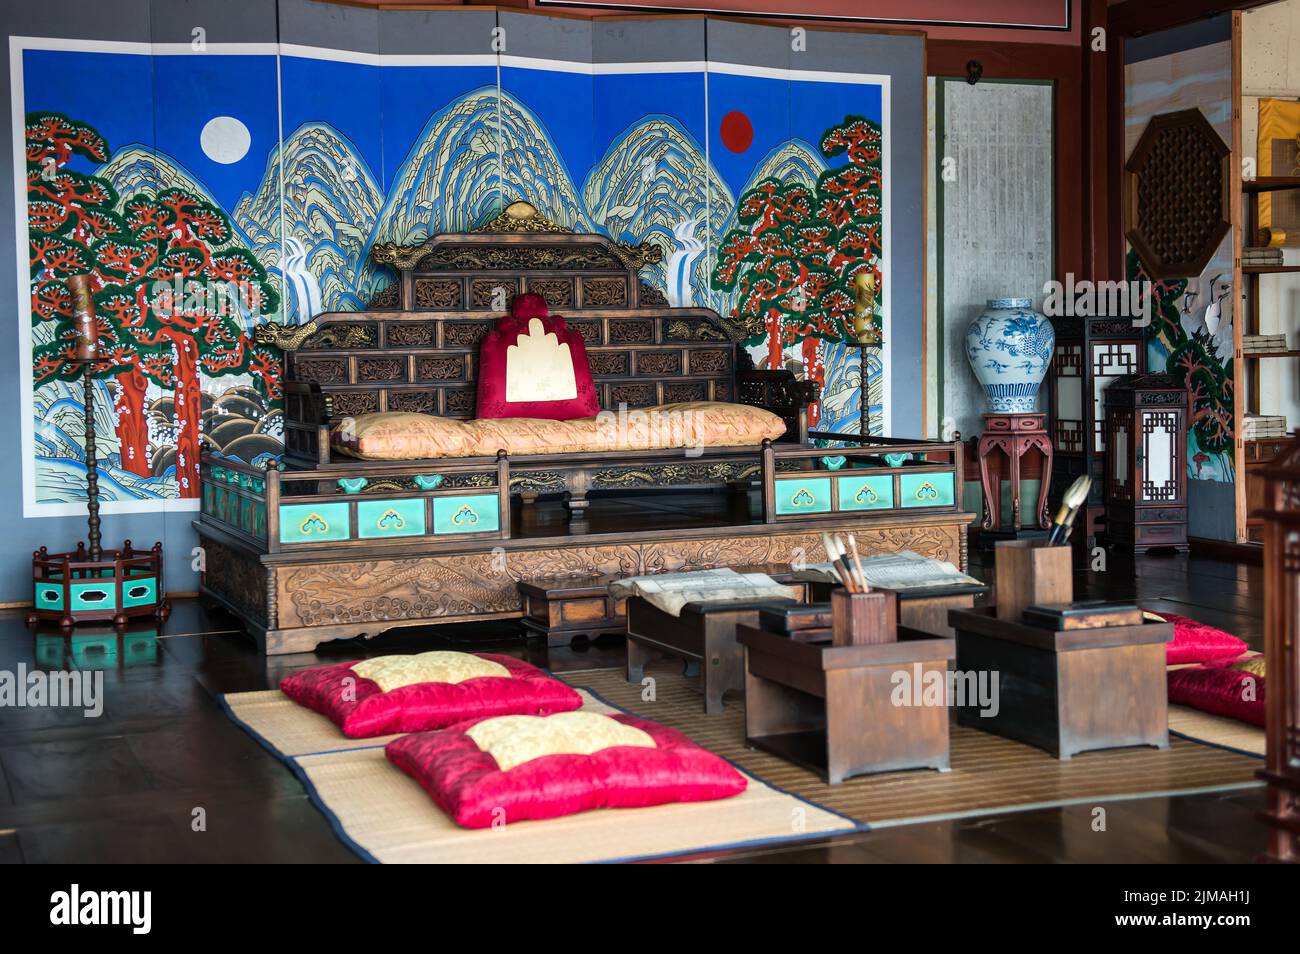 Hwaseong Haenggung Palace - Beautiful Traditional interior. Photo taken on December 23, 2016 Stock Photo